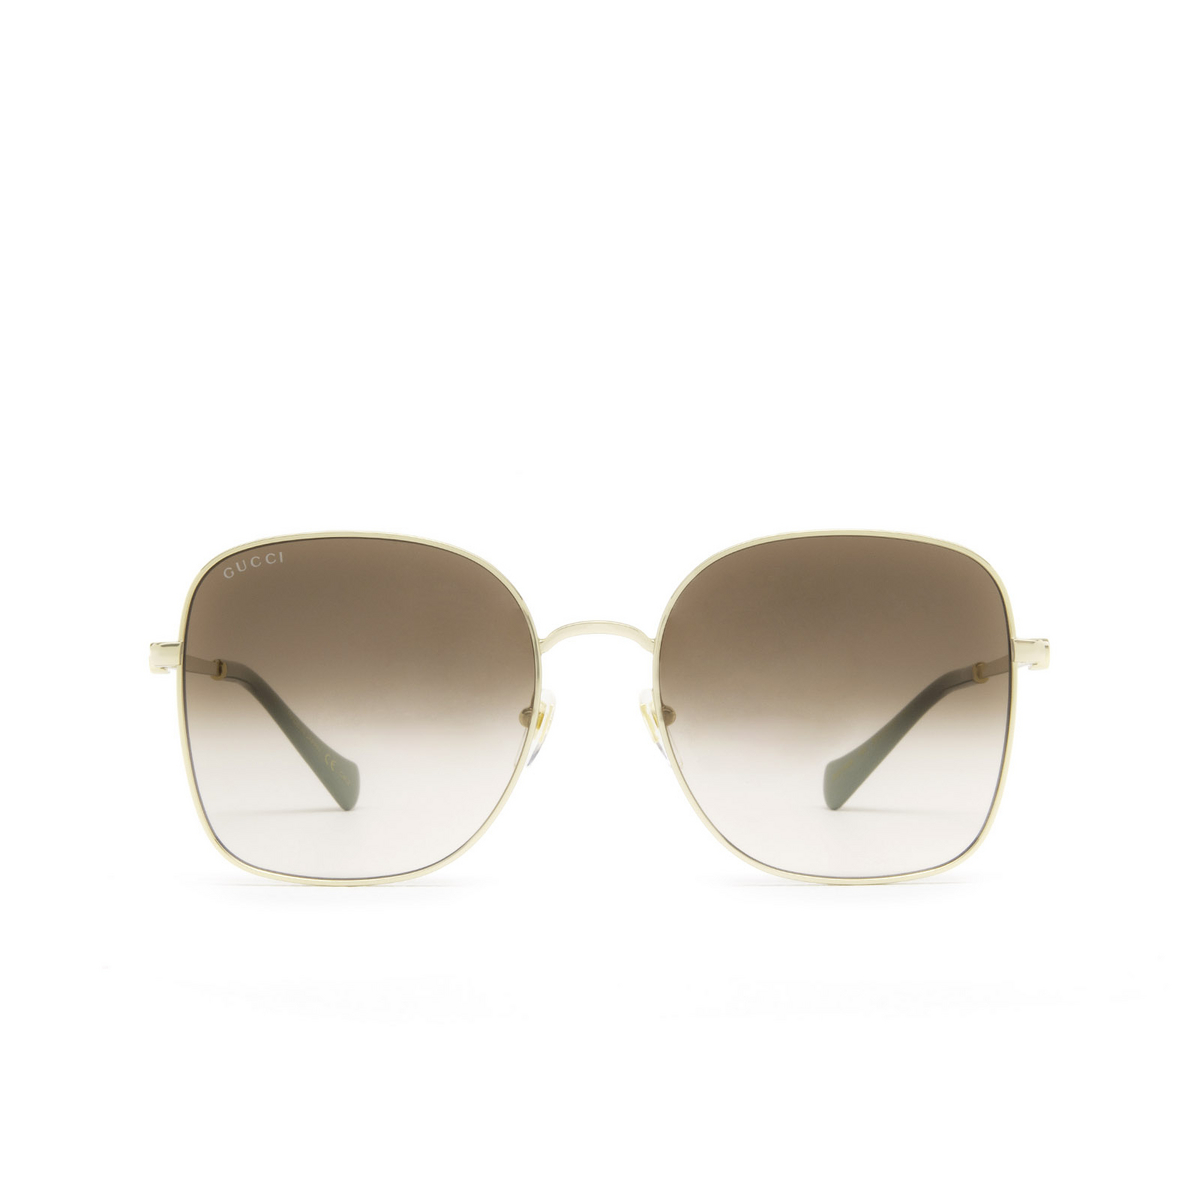 Gucci® Square Sunglasses: GG1143S color 002 Gold - front view